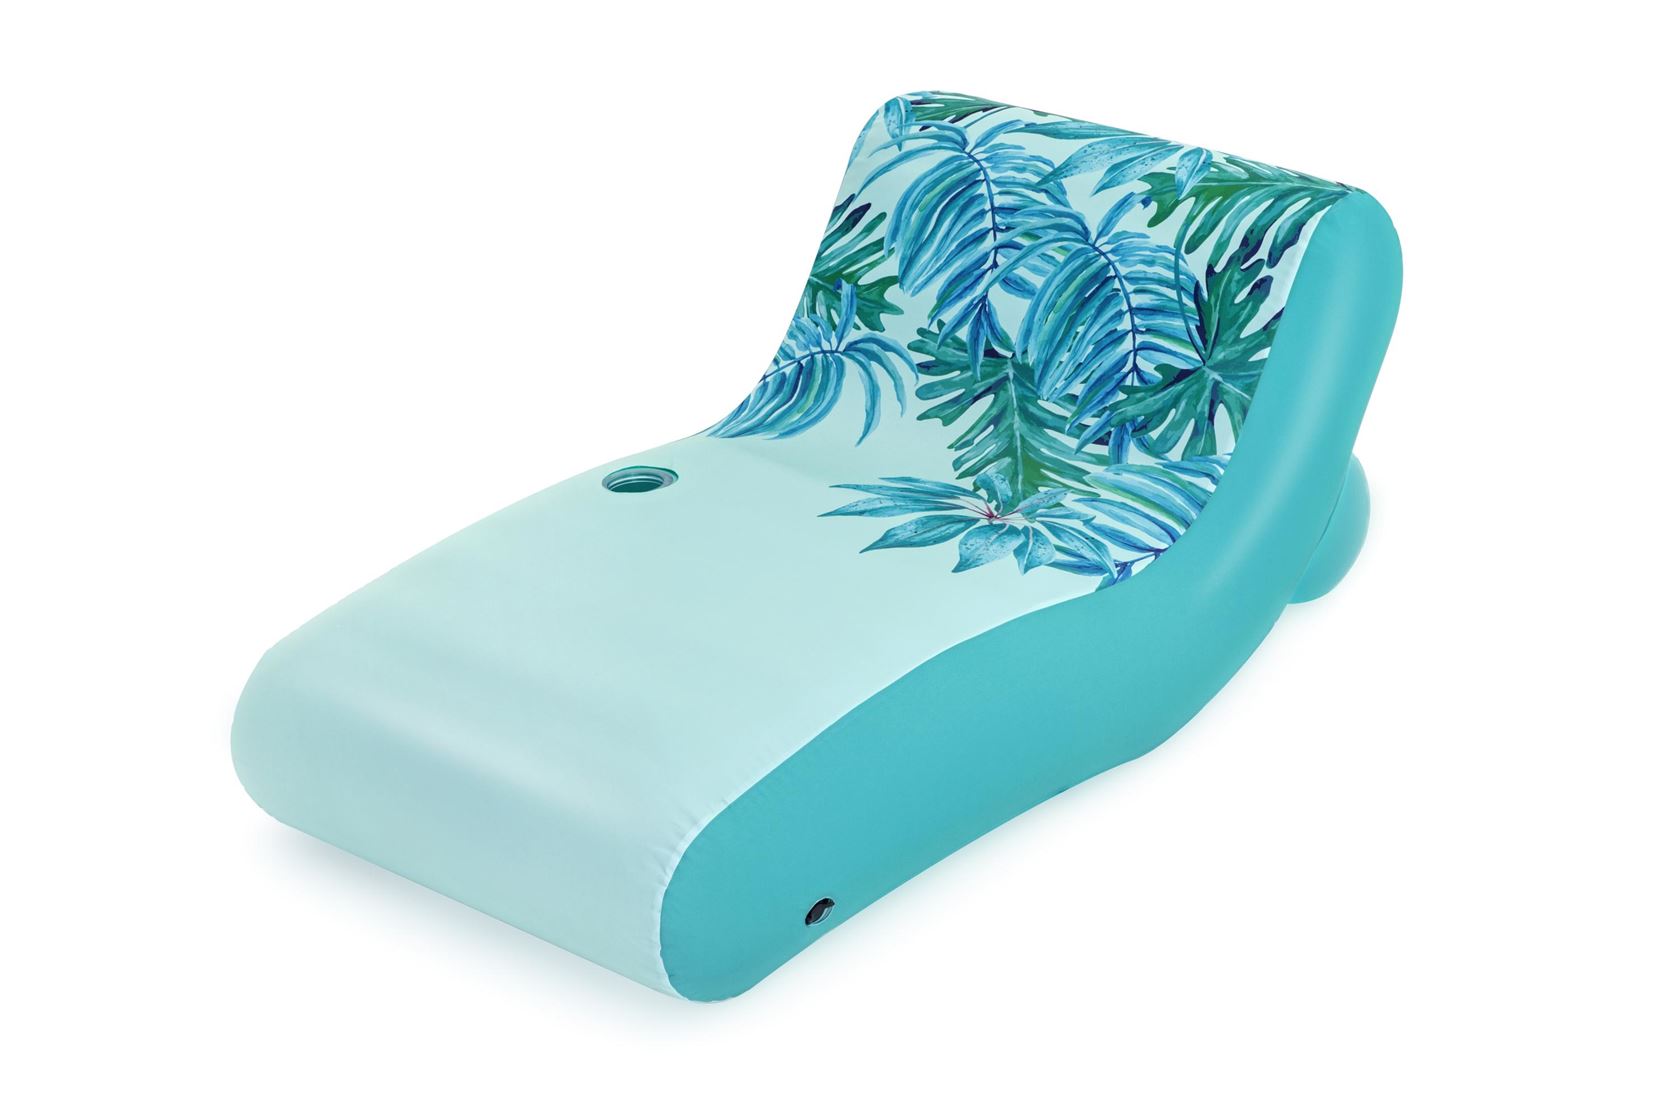 Bestway inflatable air mattress Lounge Bed - blue - L176 x W107 cm